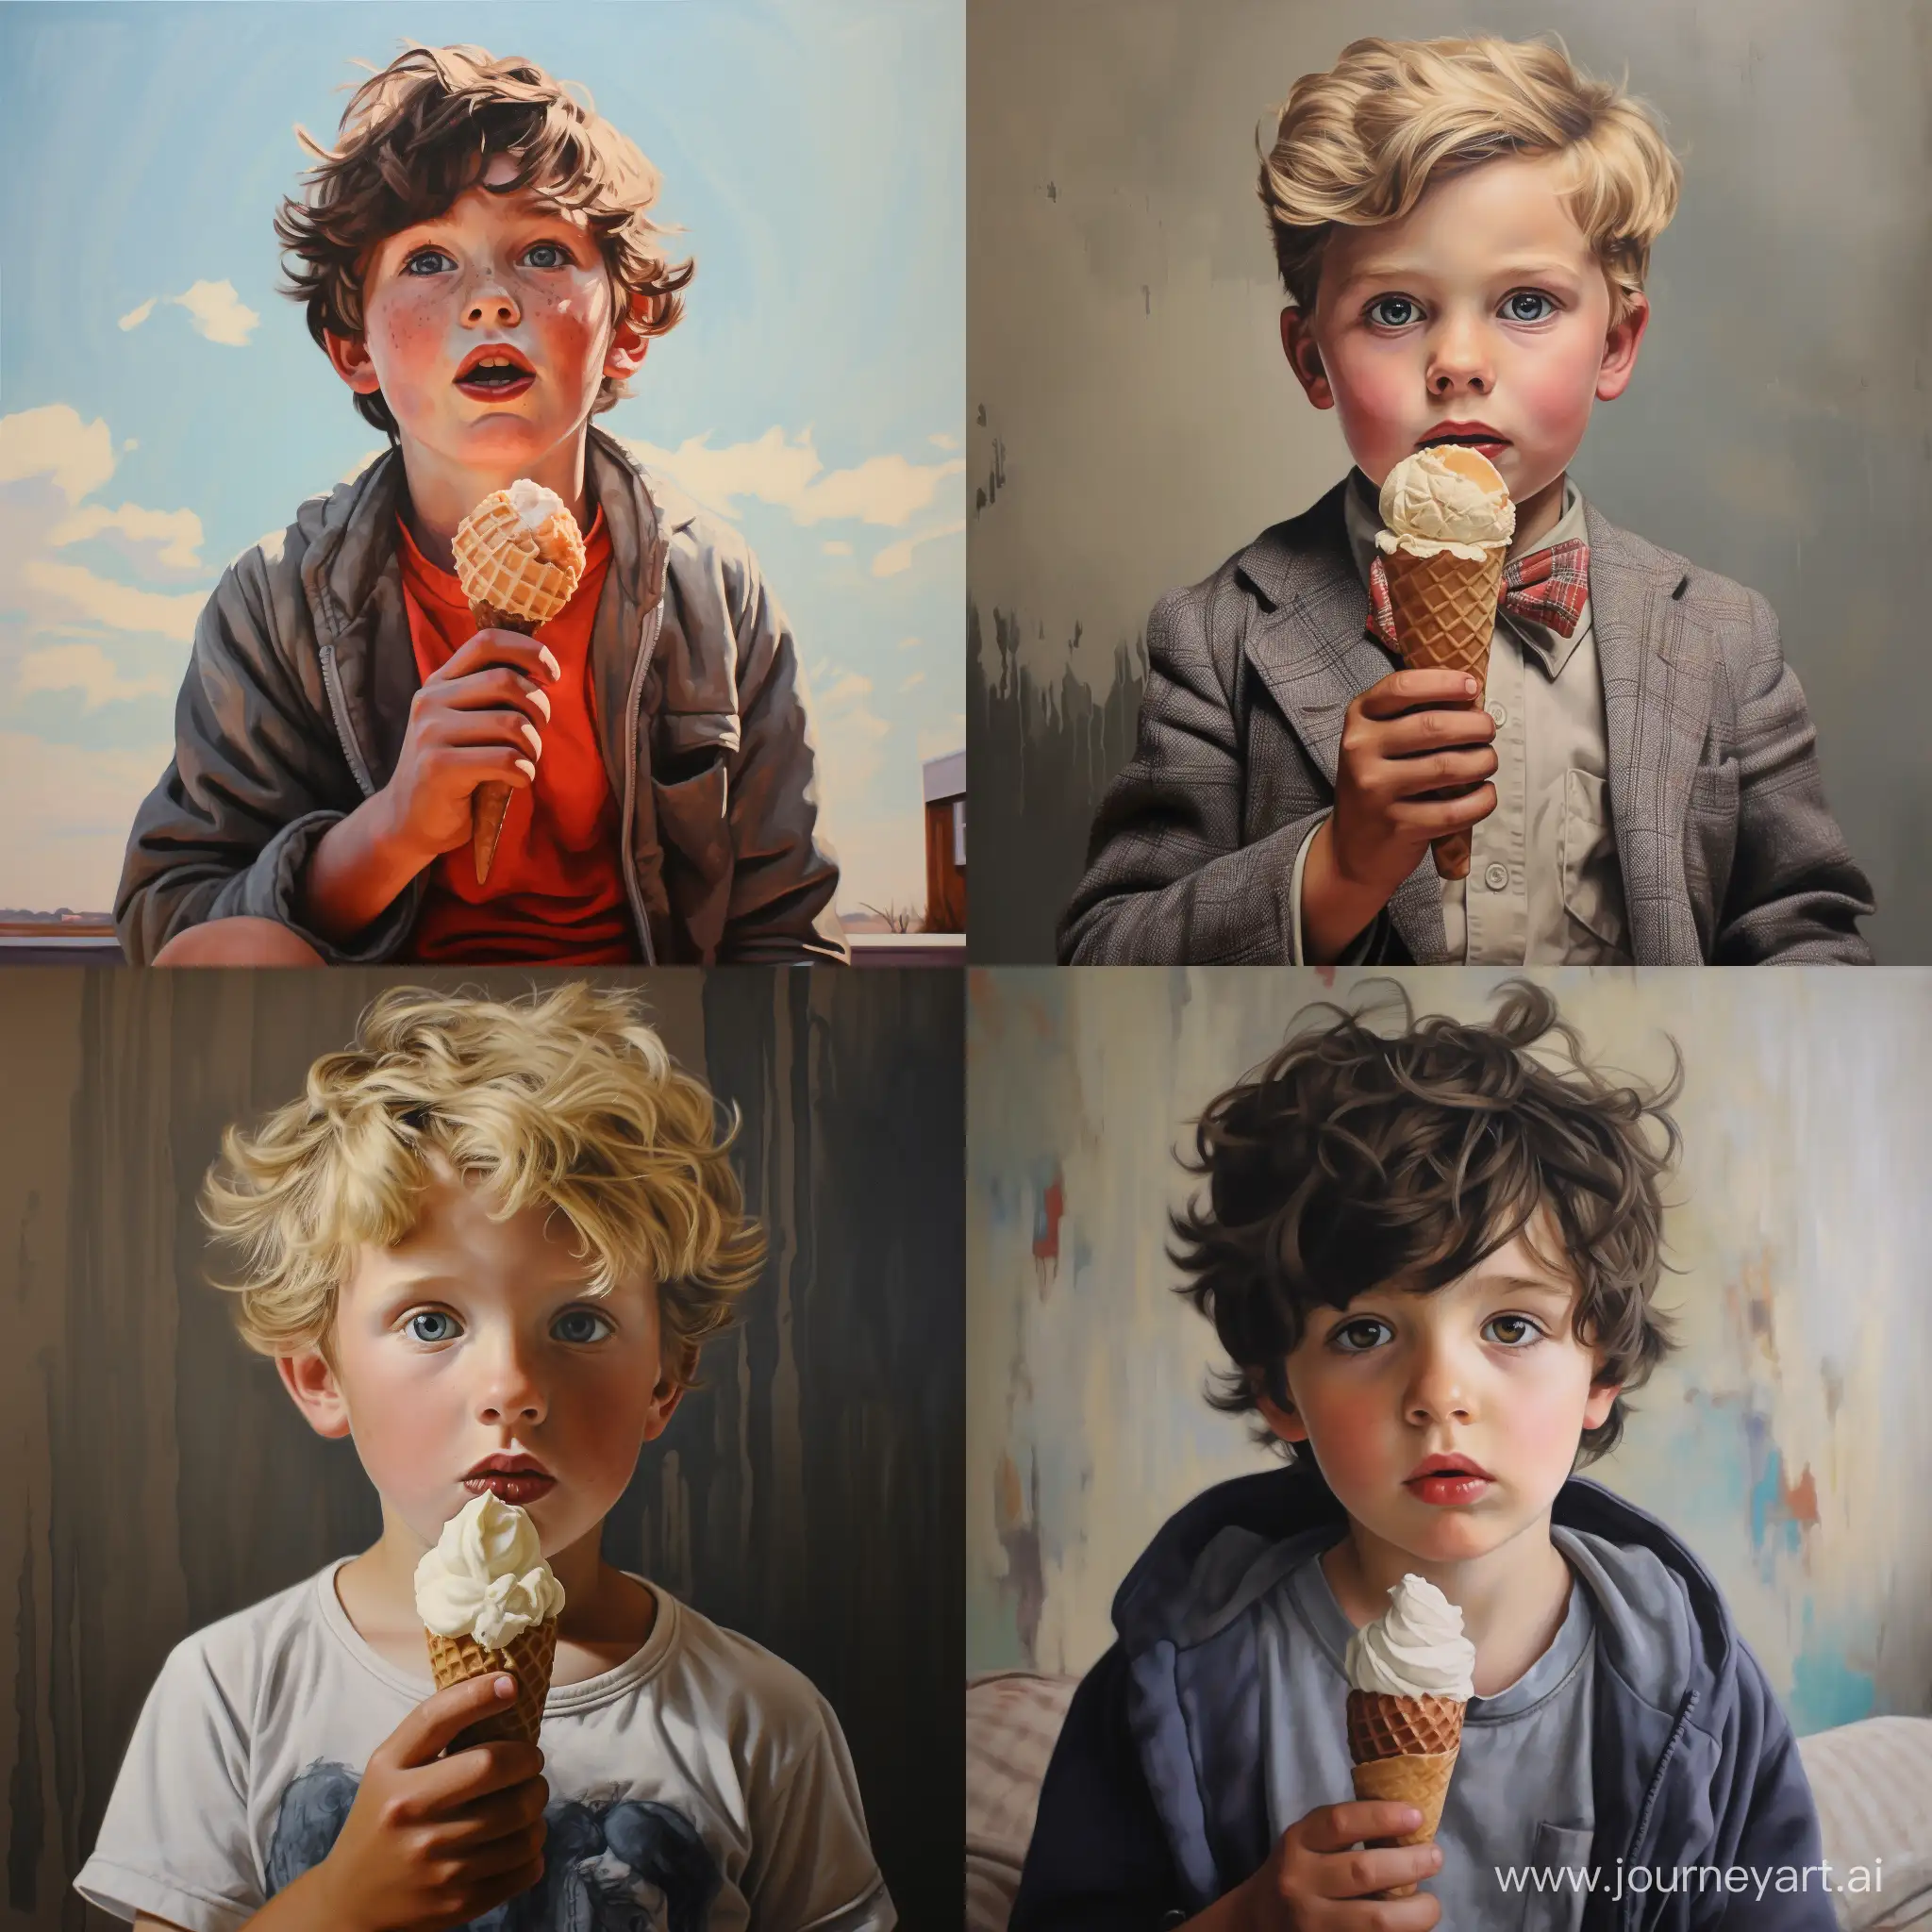 portrait of a boy eating ice cream